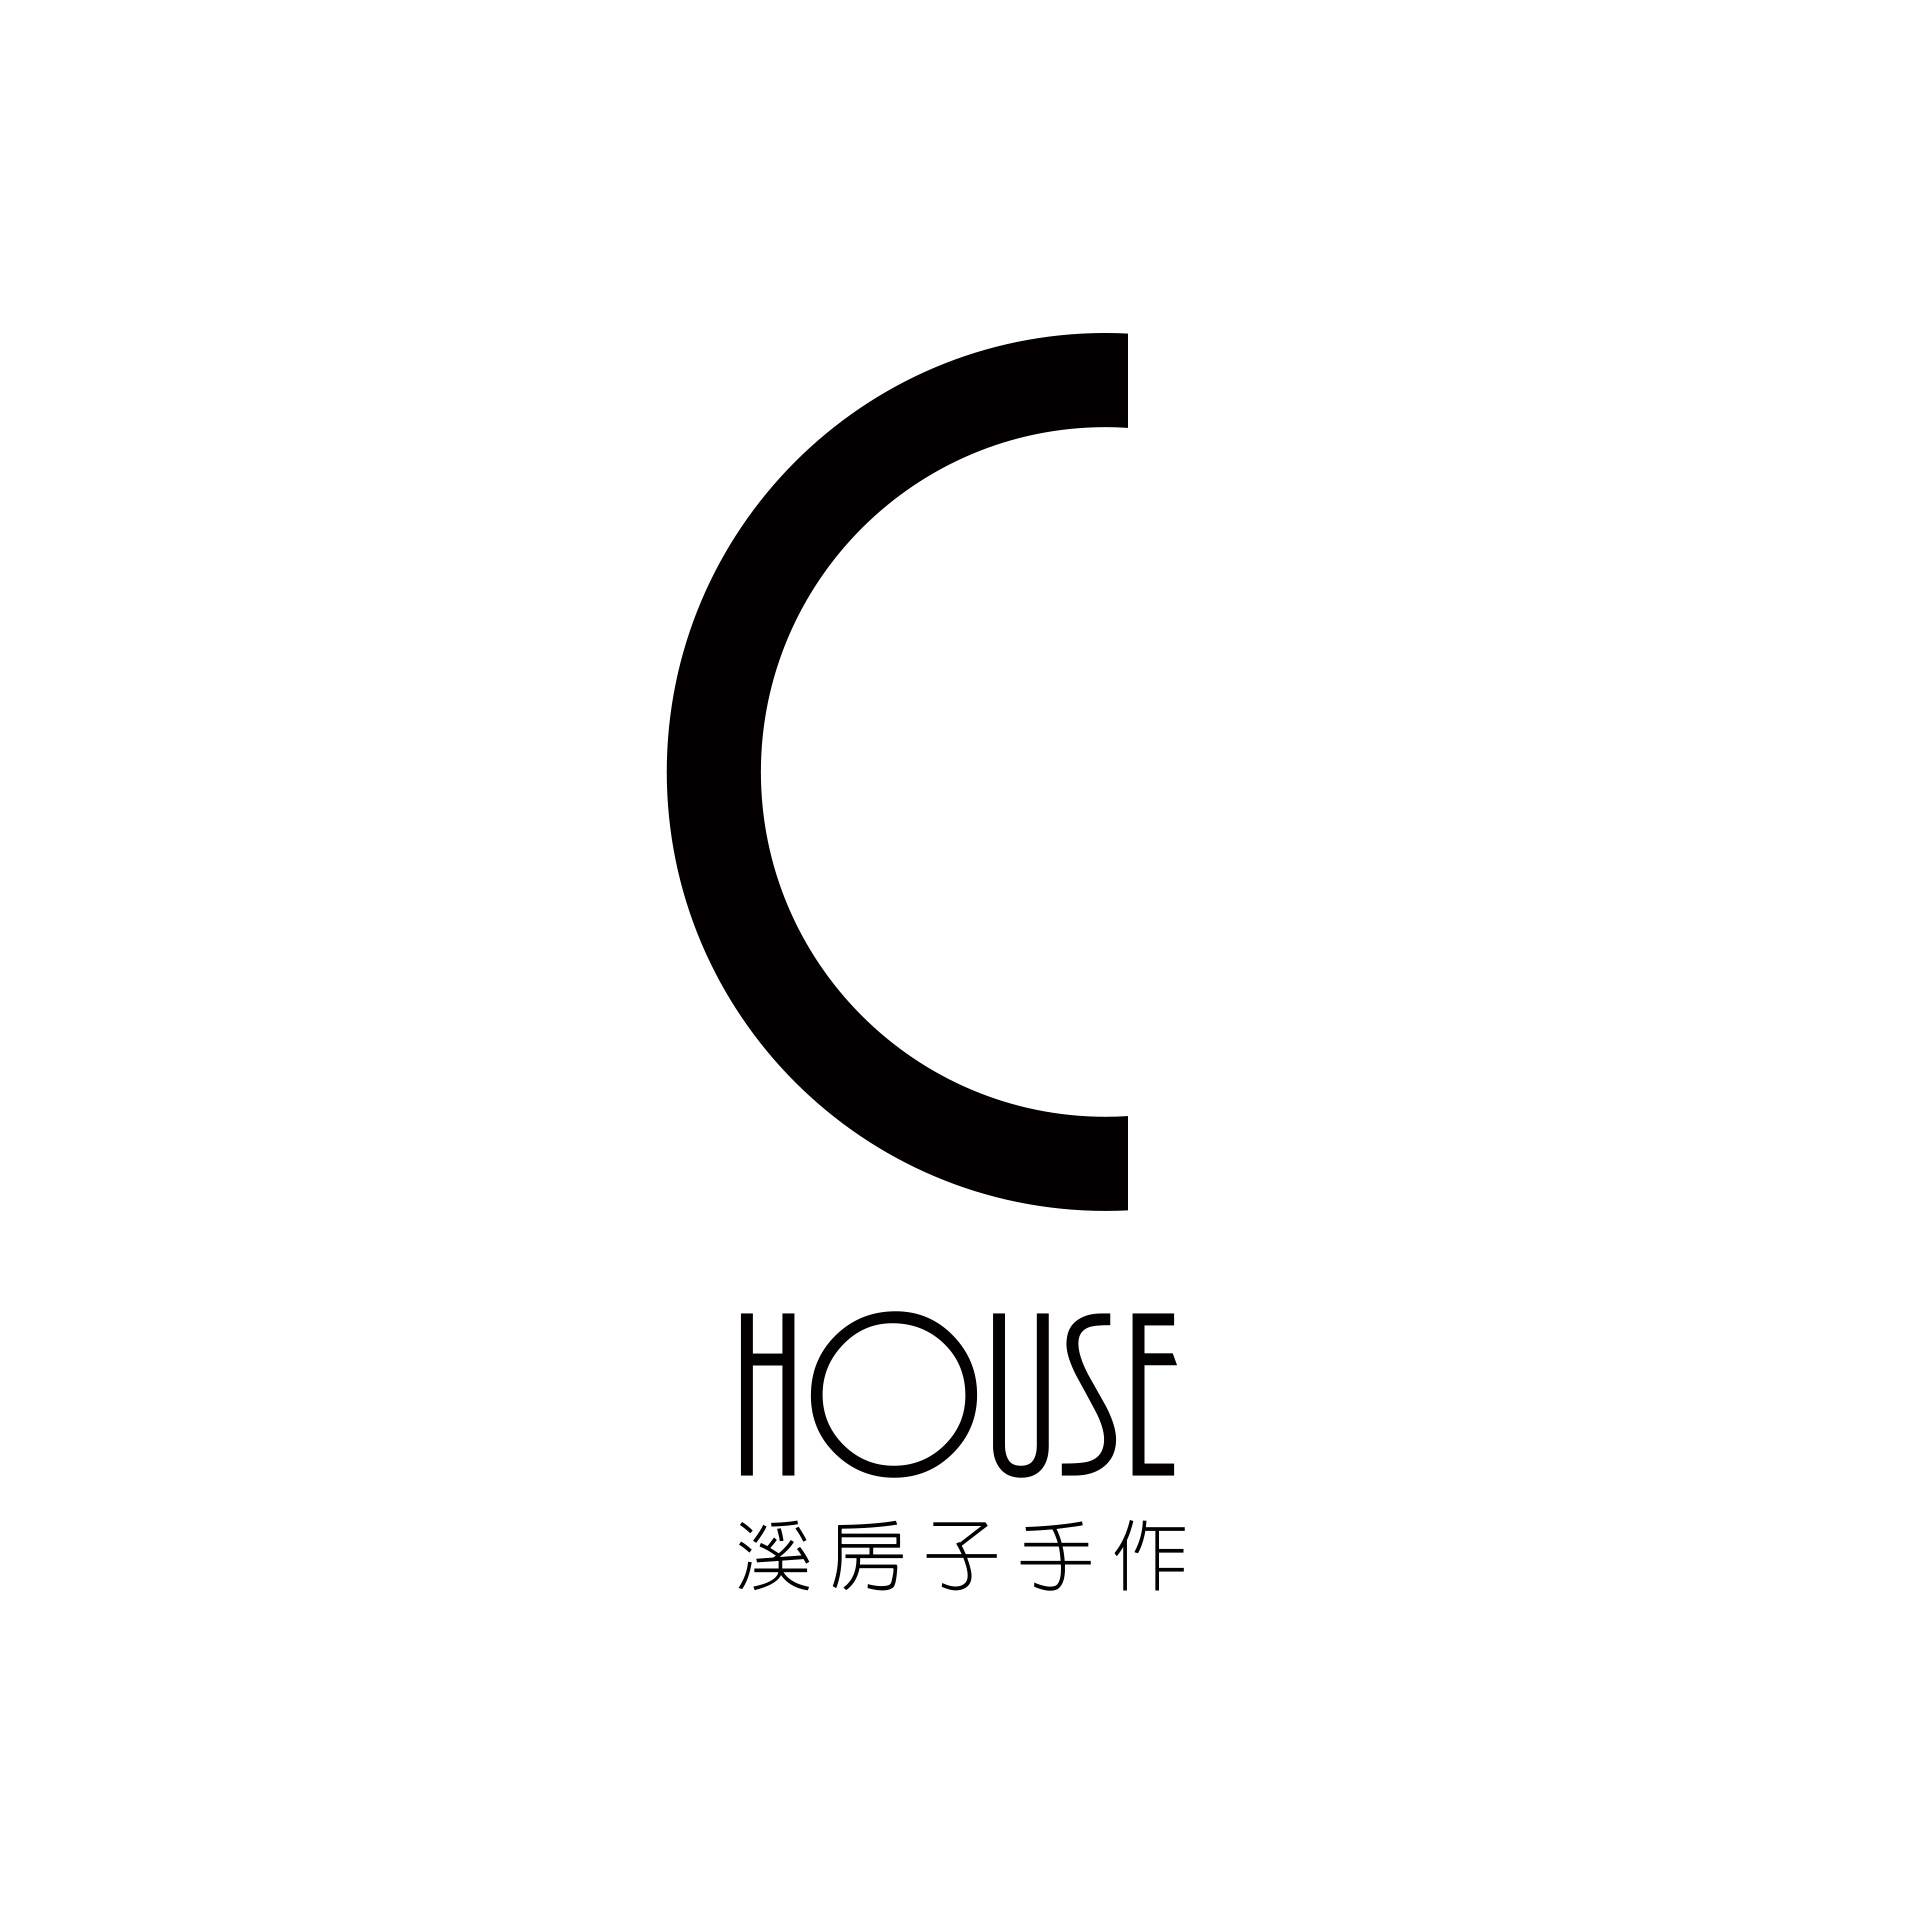 C house